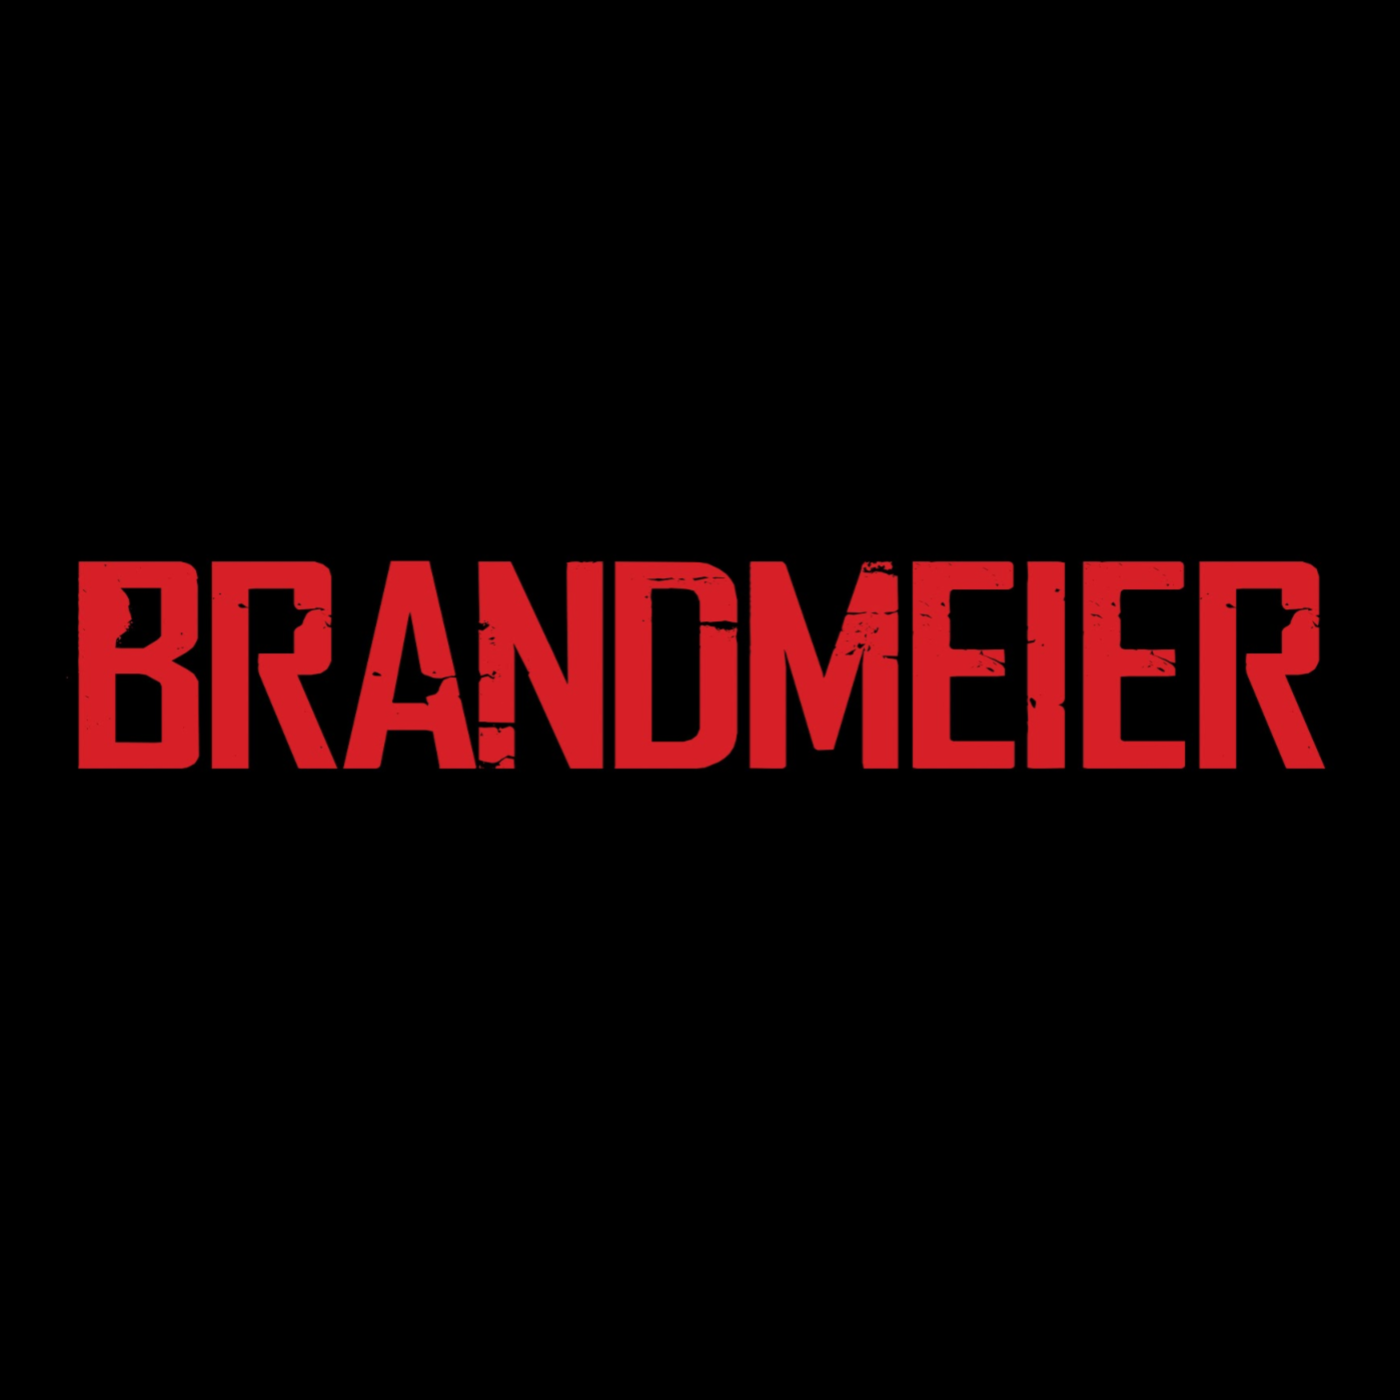 (c) Brandmeiershow.com